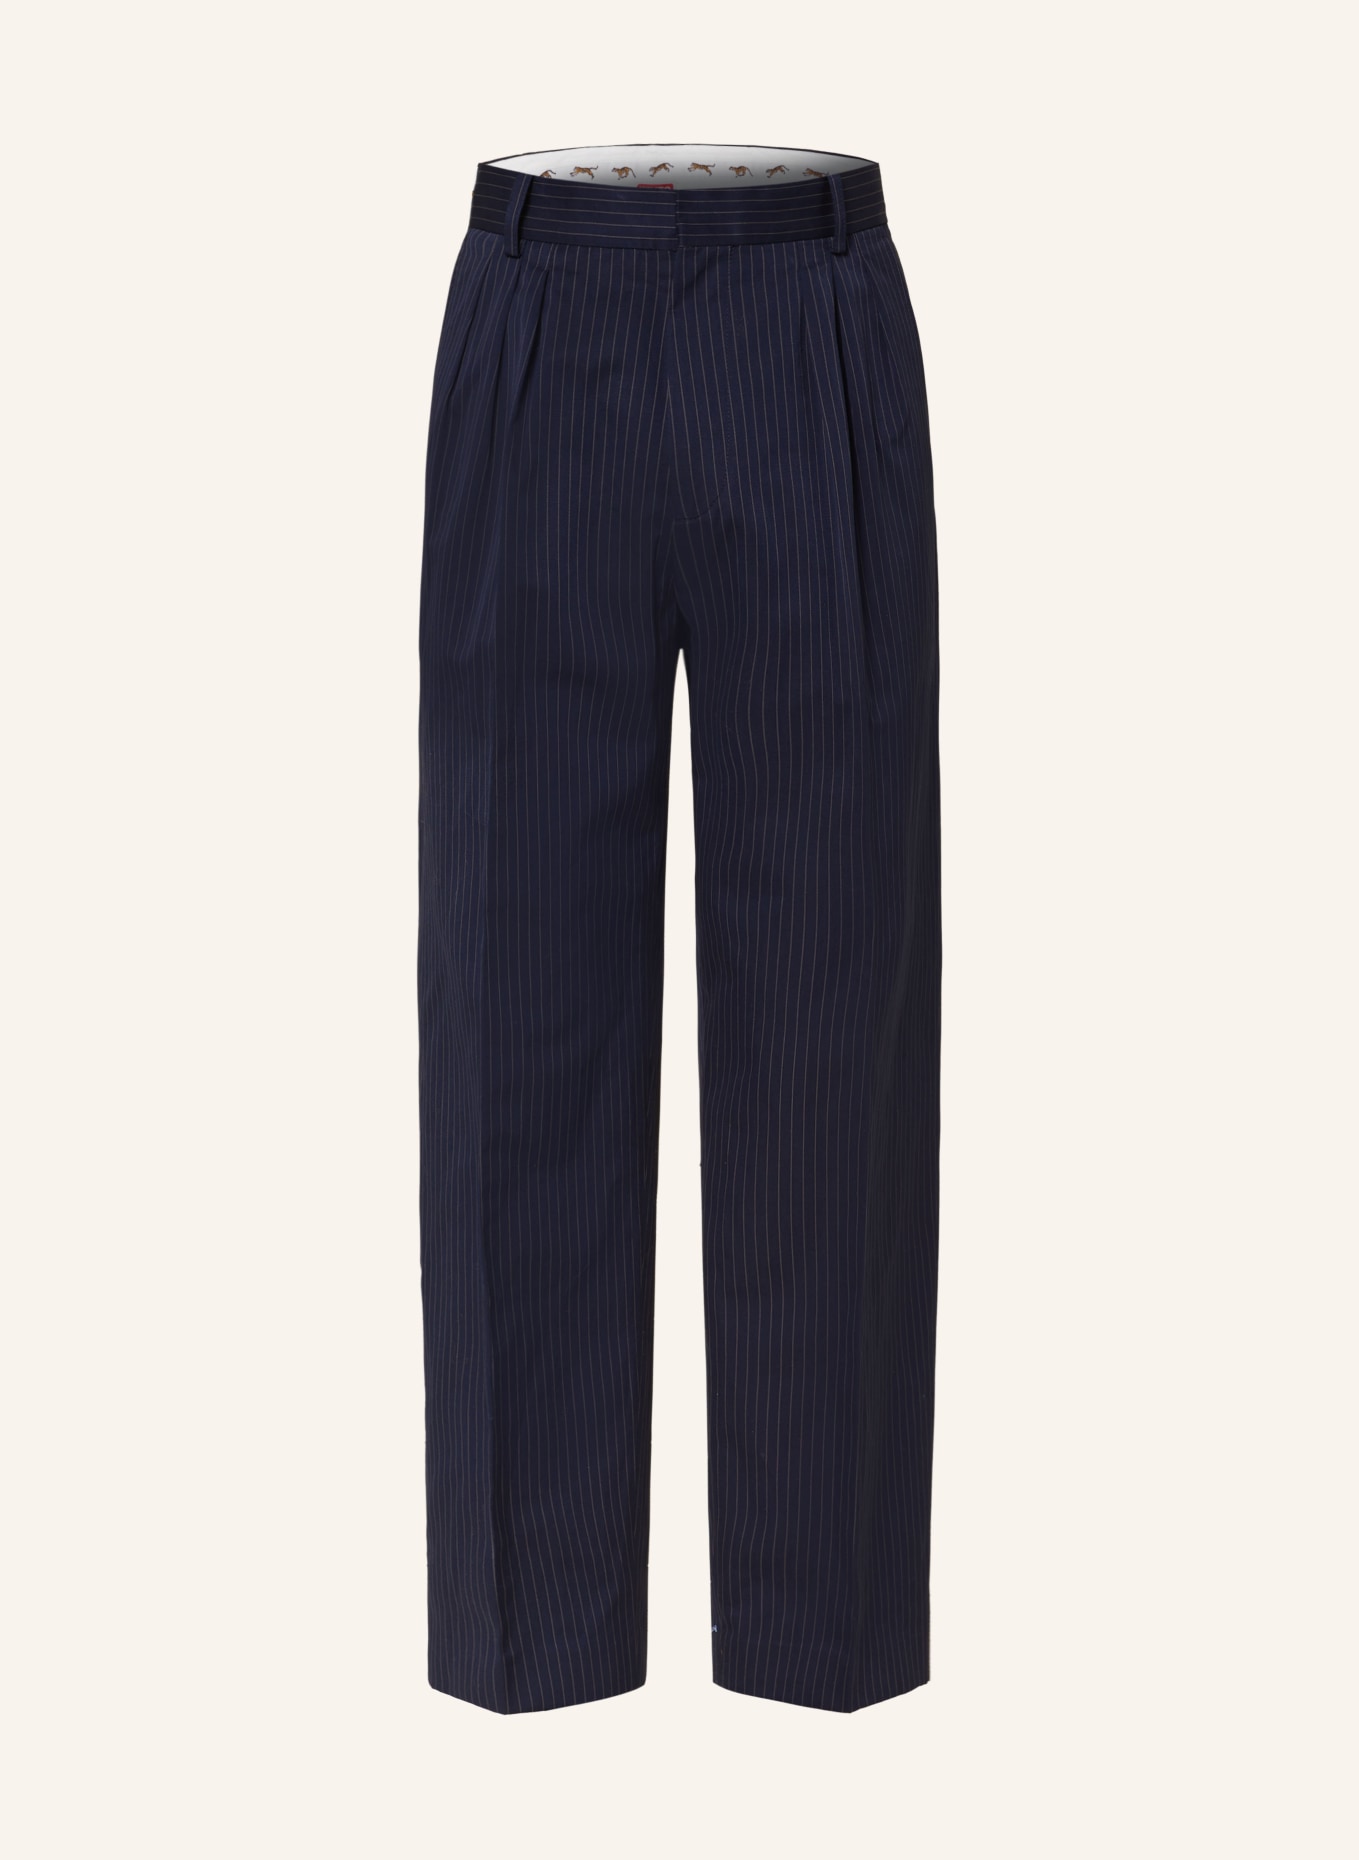 KENZO Hose Tailored Fit, Farbe: DUNKELBLAU/ BEIGE (Bild 1)